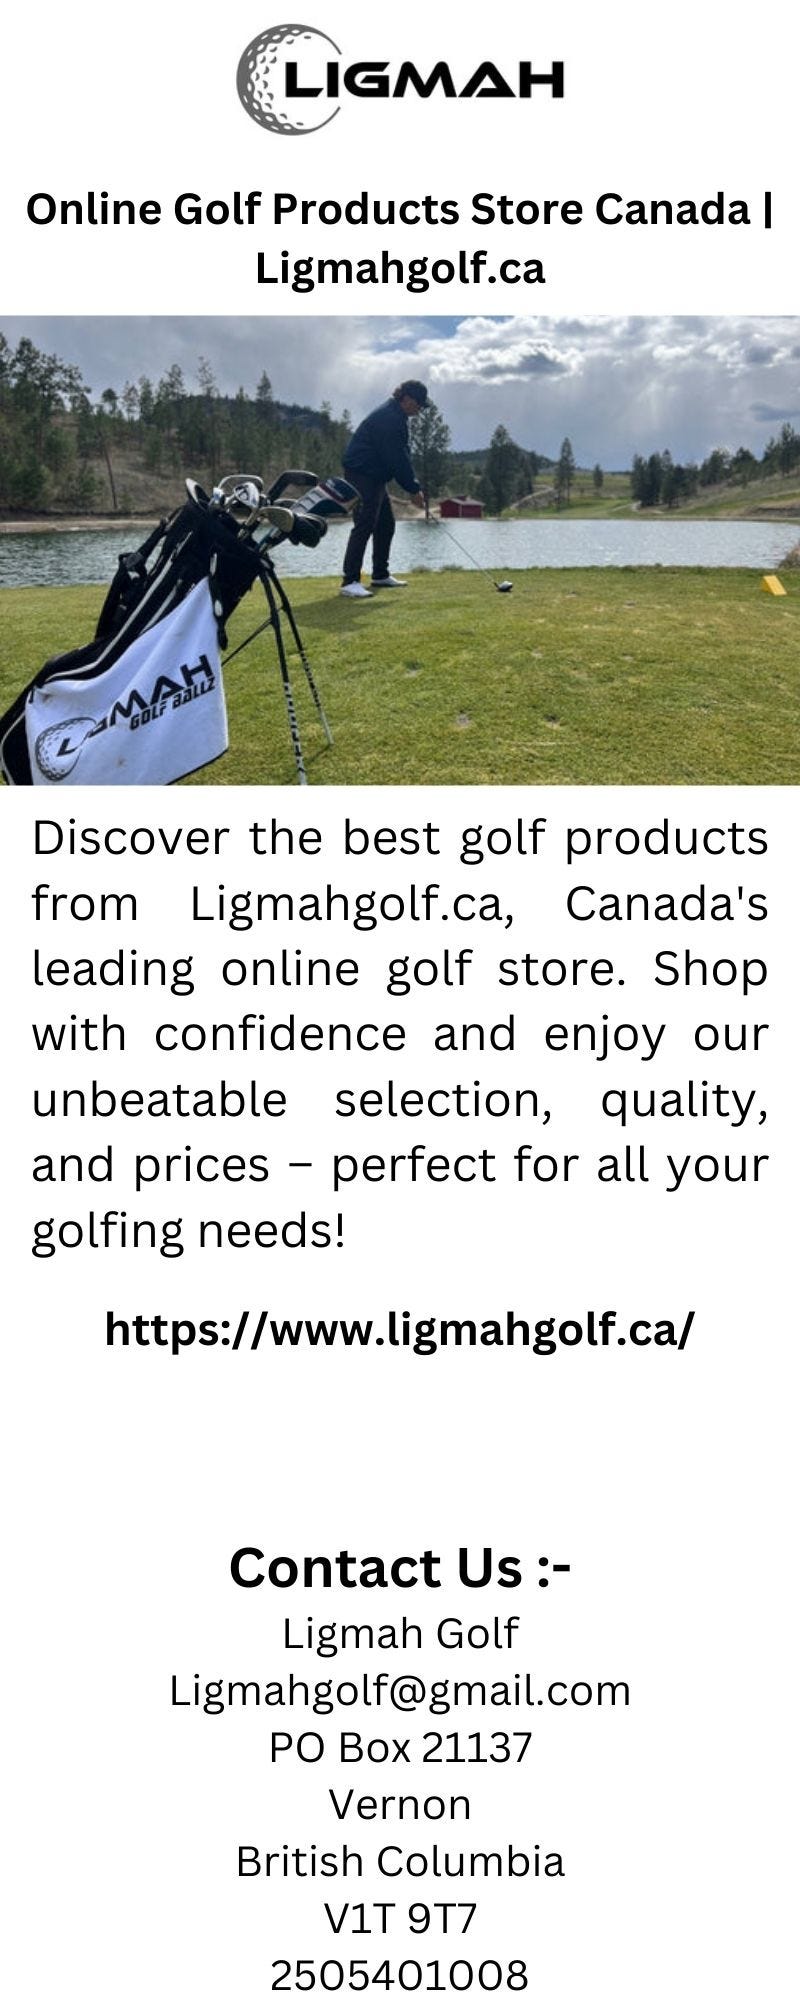 Online Golf Products Store Canada Ligmahgolf.ca - Ligmah Golf